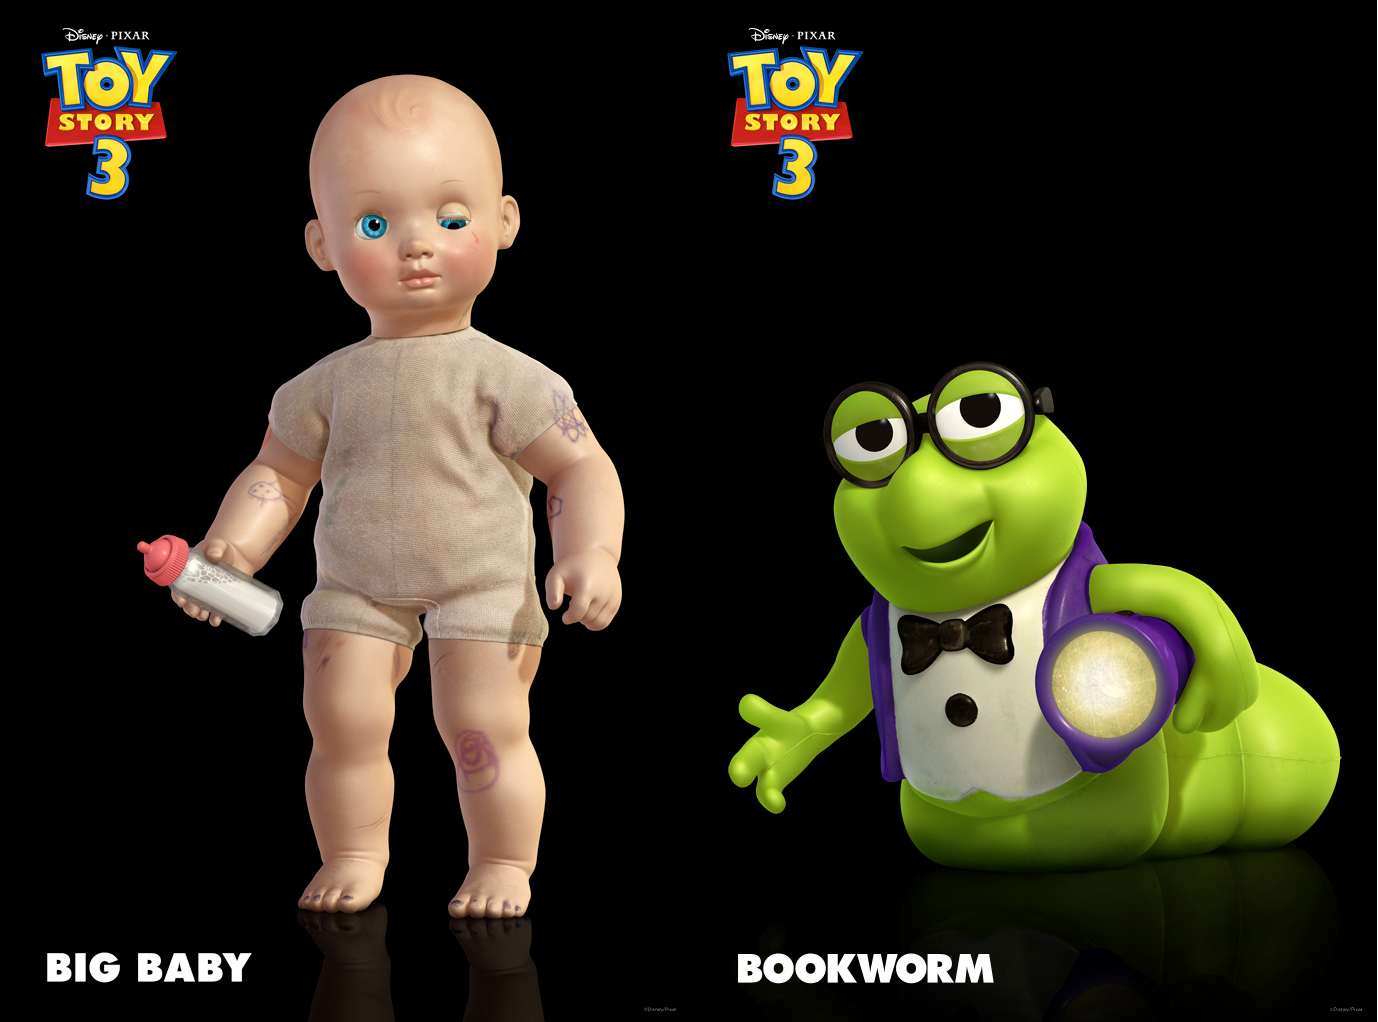 Big baby love. История игрушек мега пупс. Toy story 3. Big Baby Toy story игрушка. Toy story 3 игрушки.